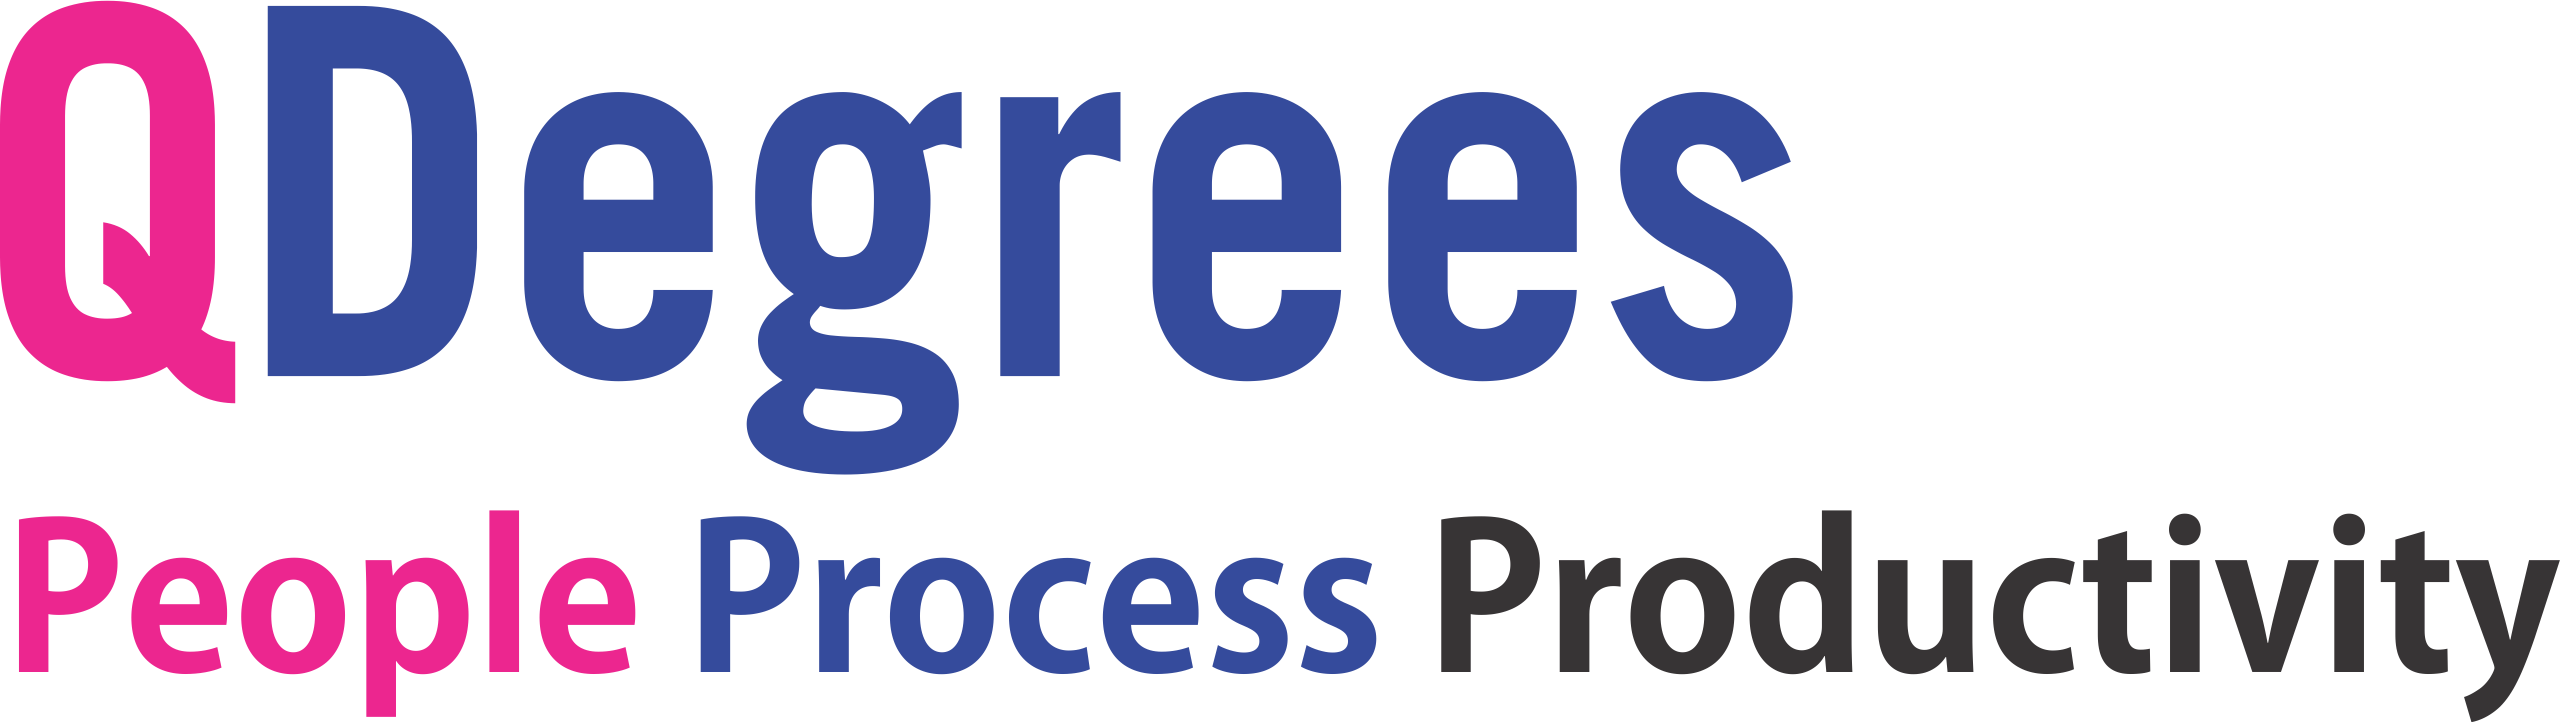 QDegrees Project Management Services